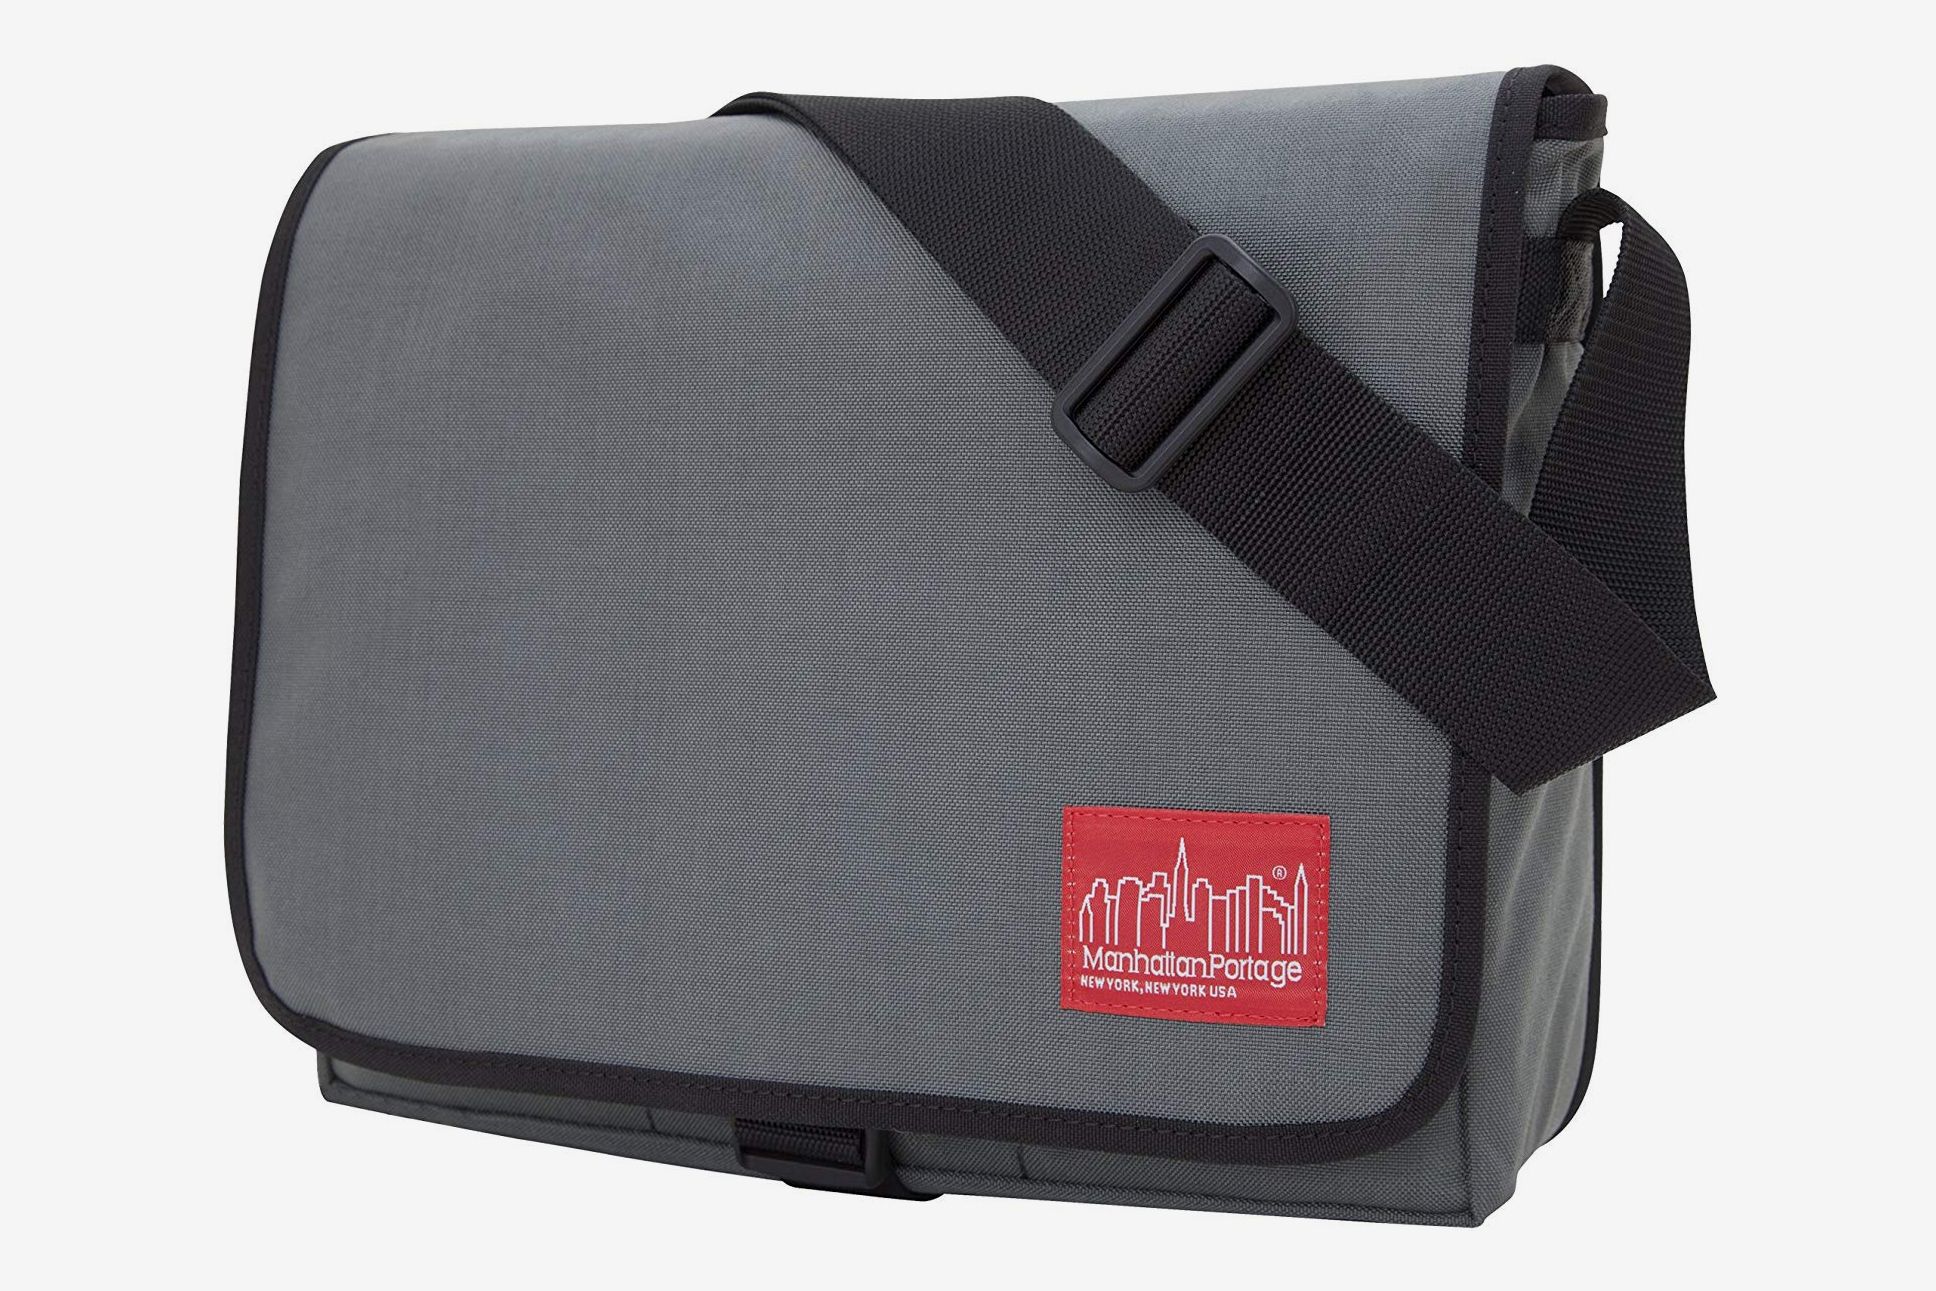 Laptop Case Computer Bag Sleeve Cover Desert Scenery Waterproof Shoulder Briefcase 13 14 15.6 Inch 